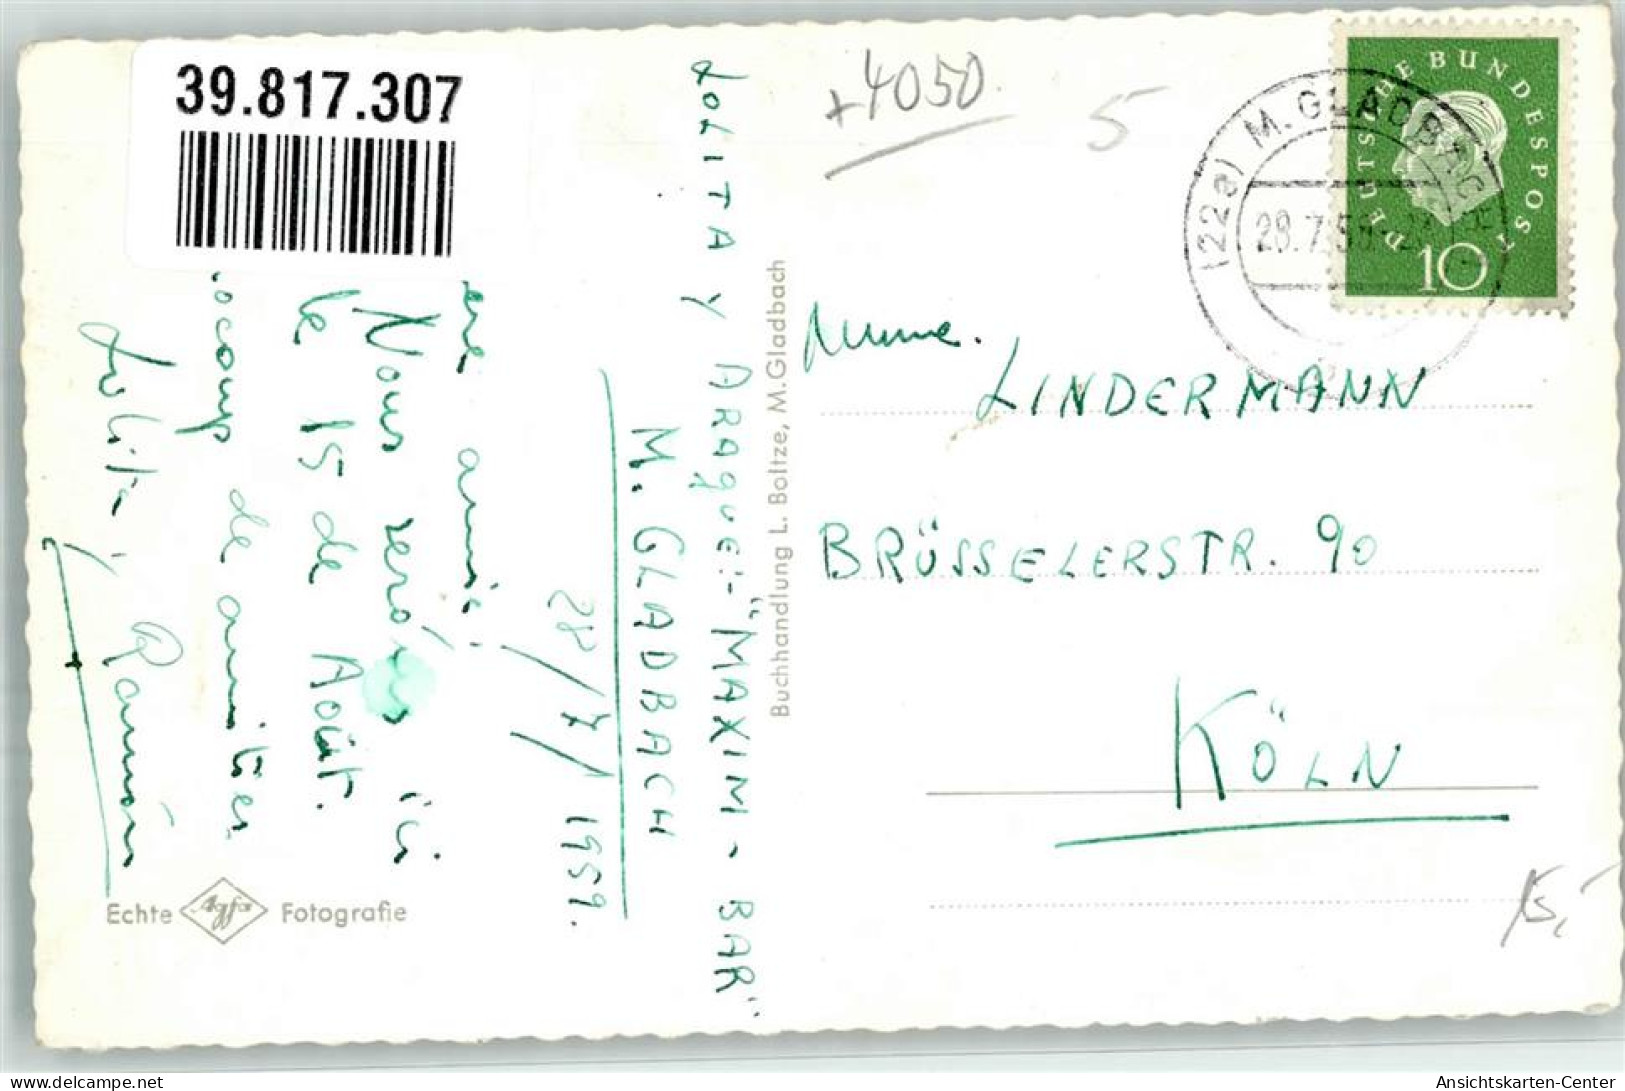 39817307 - Moenchengladbach - Mönchengladbach